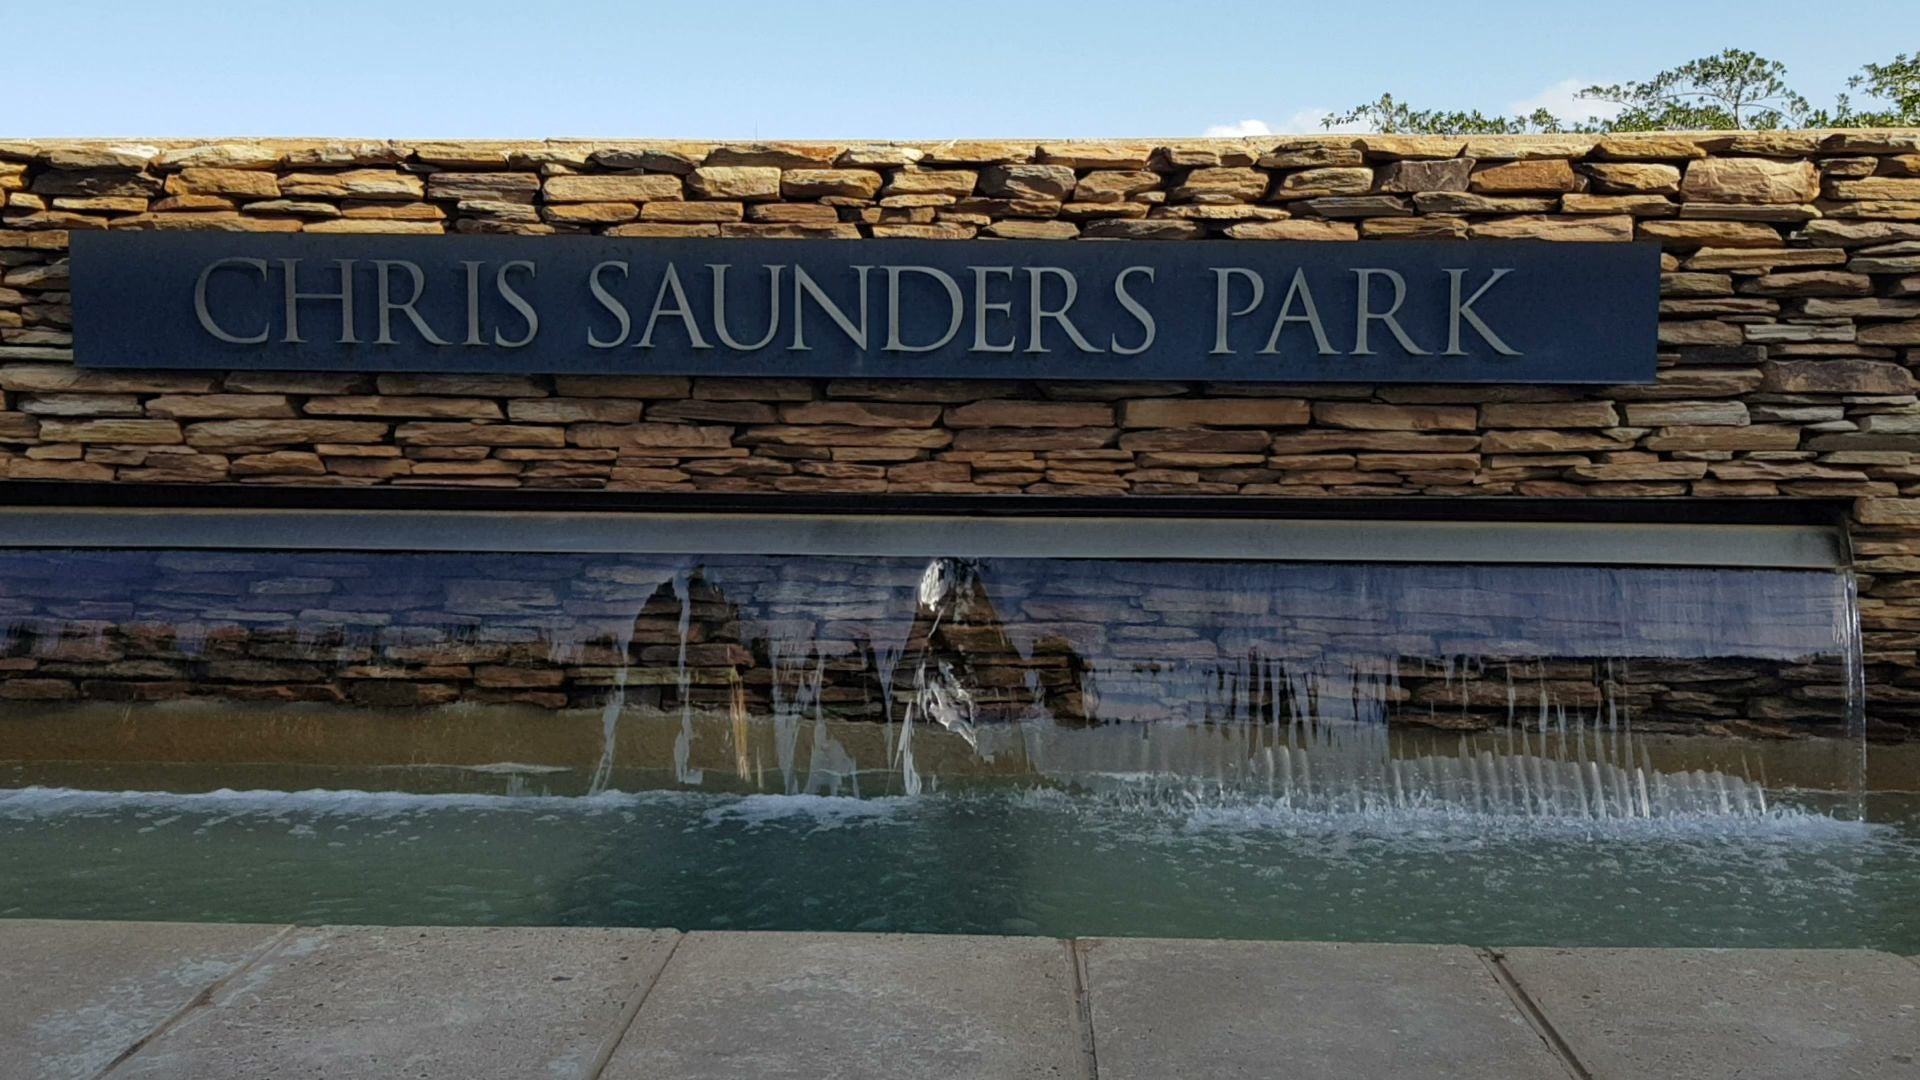  Chris Saunders Park